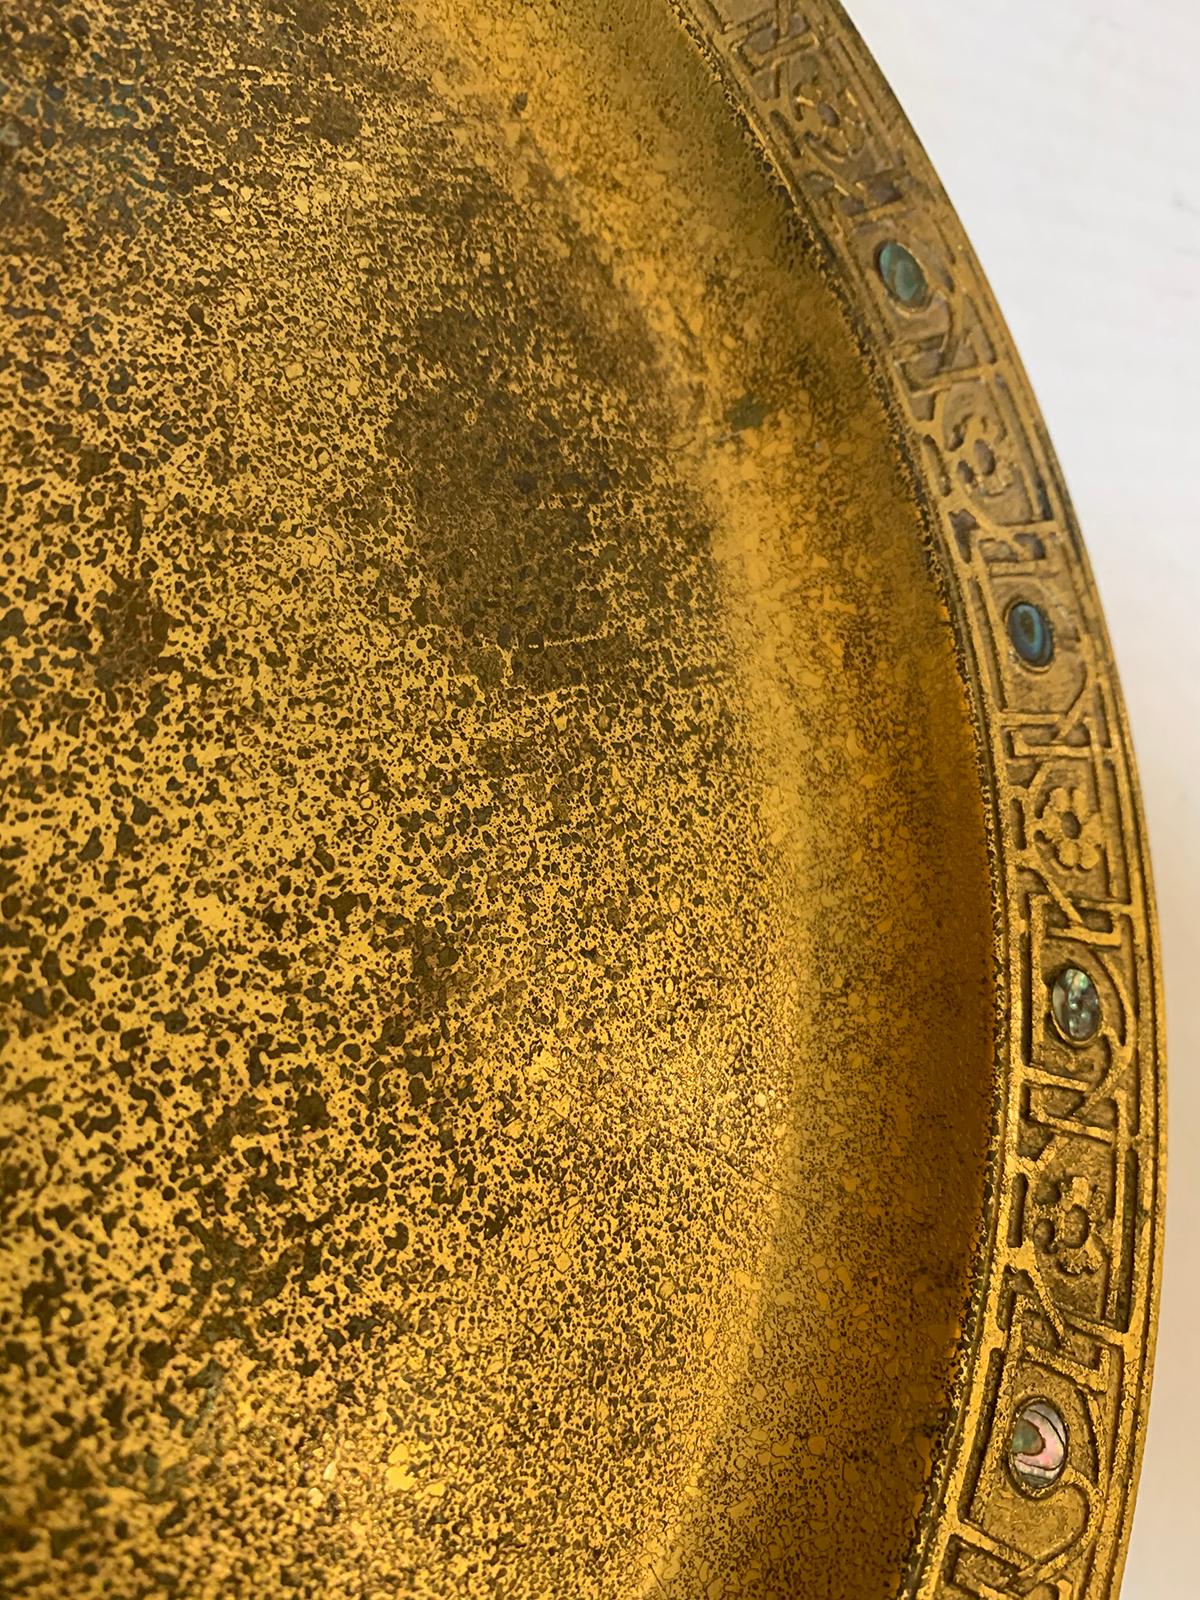 Tiffany Studios Gilt Bronze Dore Plate Abalone Pattern, Model 1730, circa 1915 5